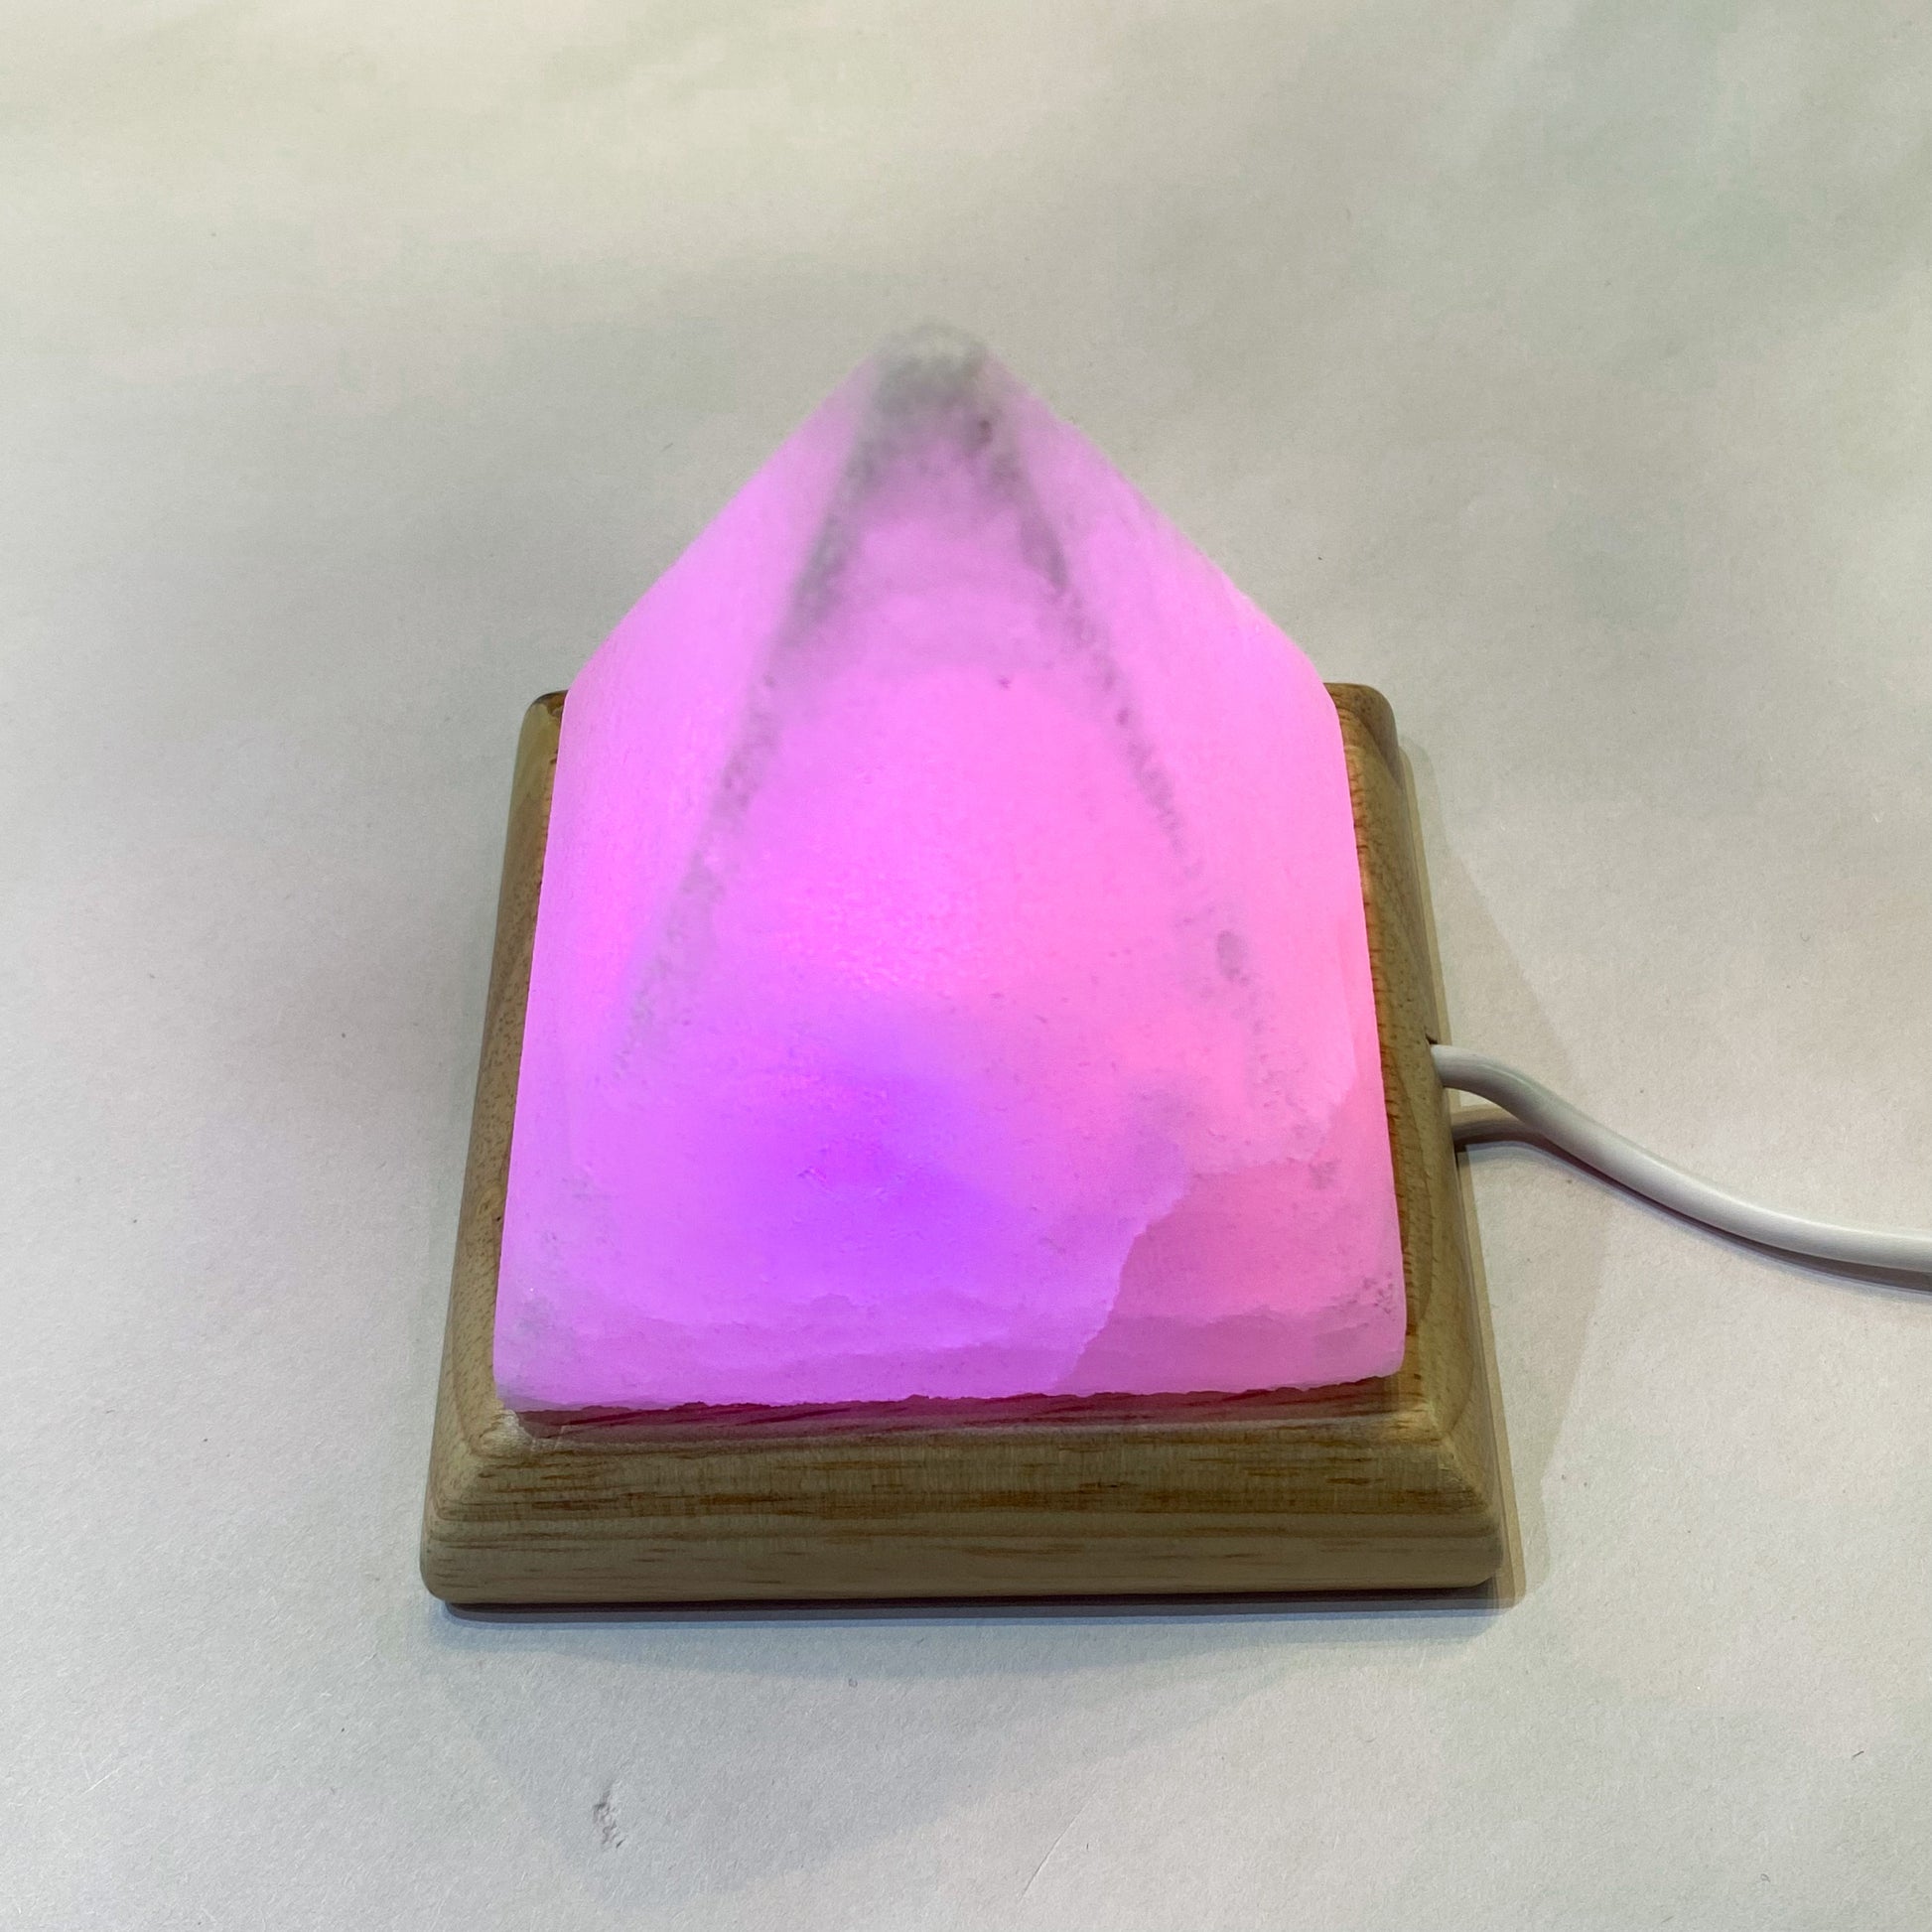 White Himalayan Salt Pyramid Lamp - Colour Changing - Rivendell Shop